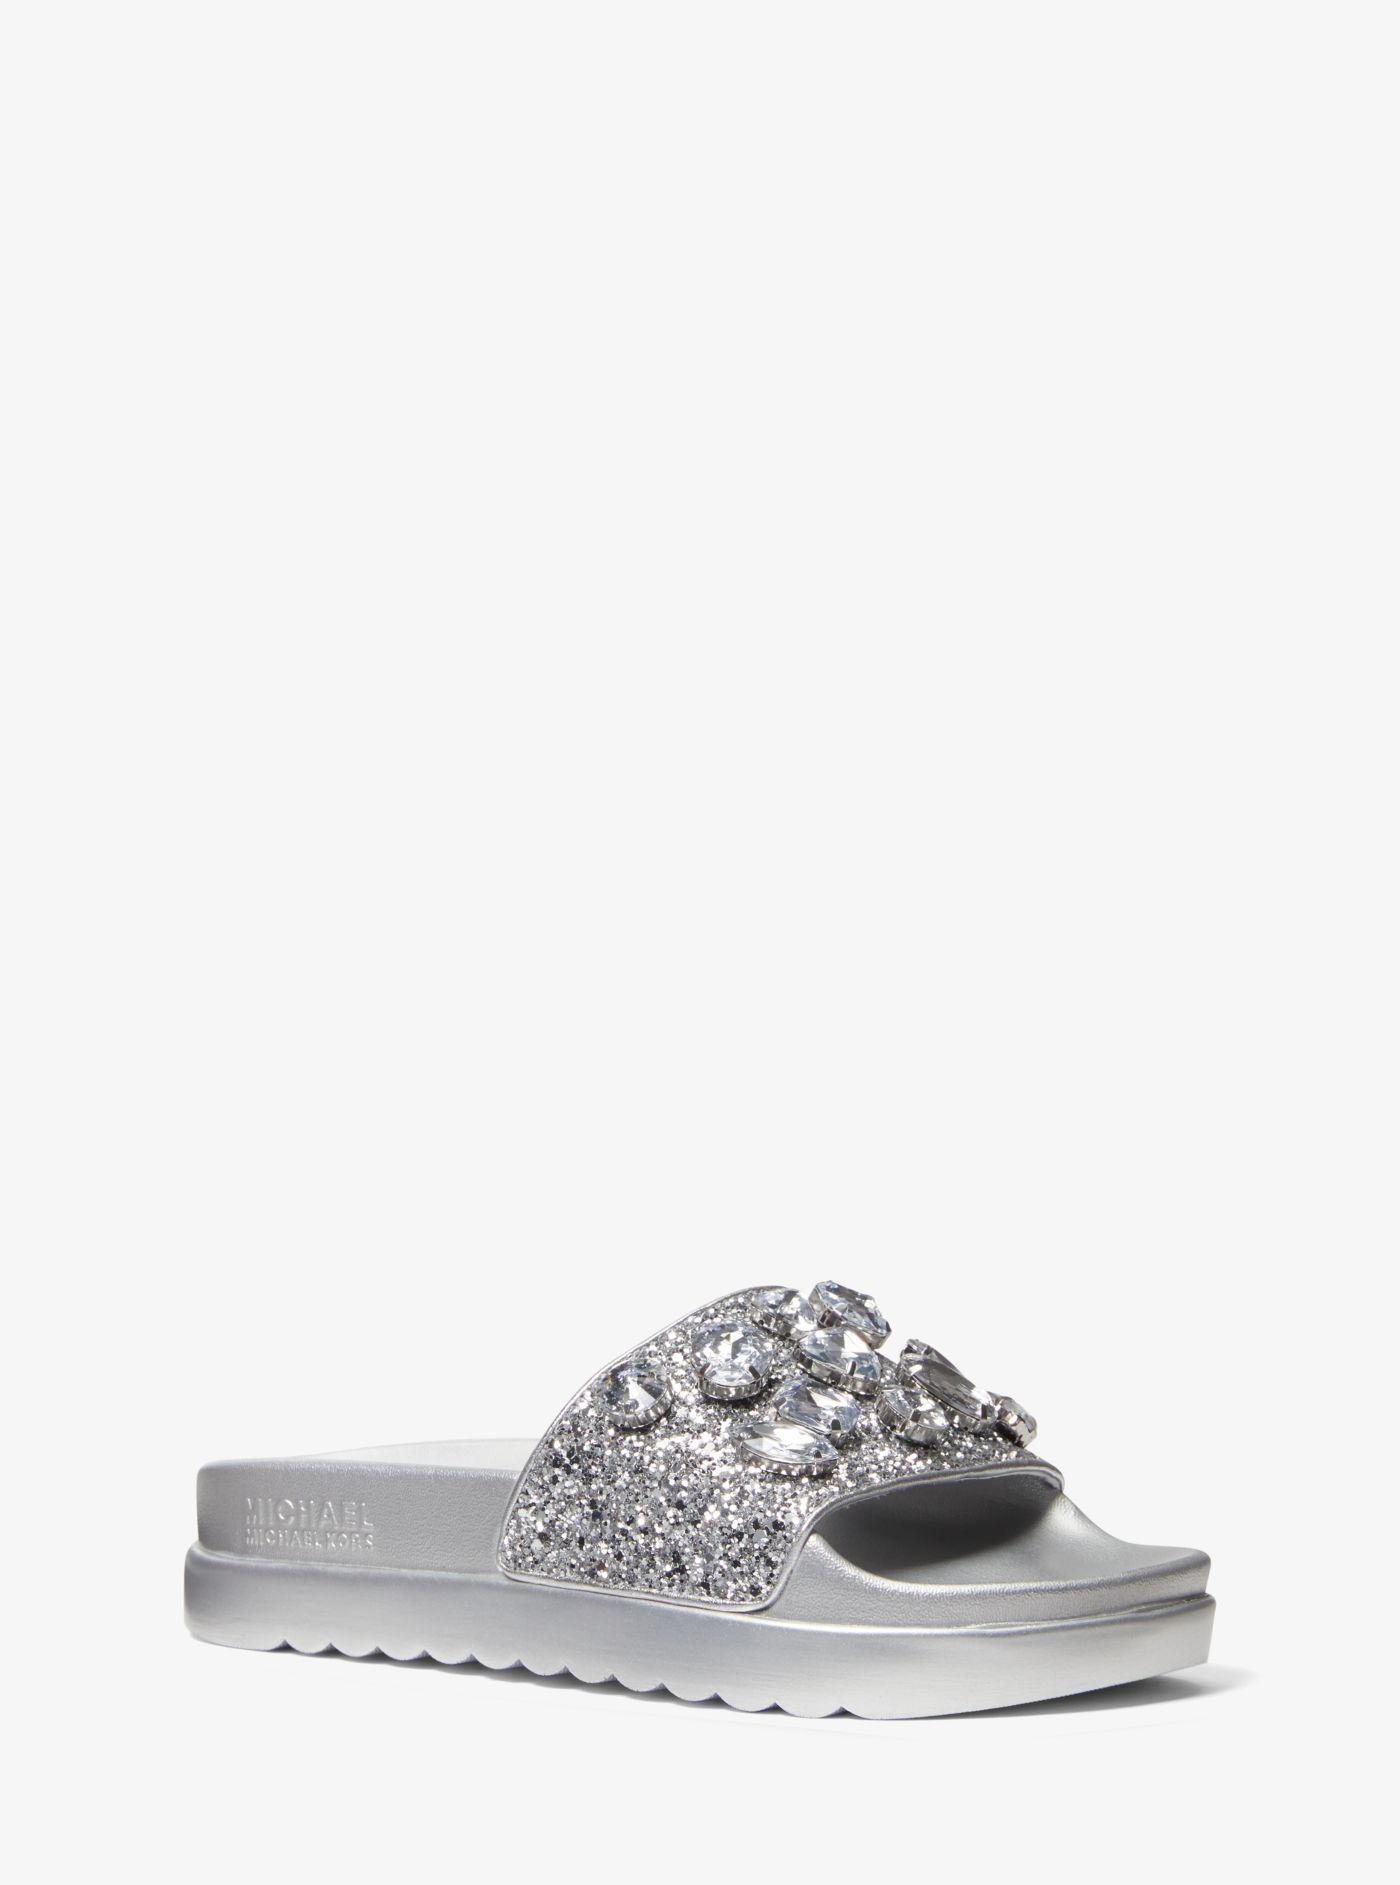 Michael Kors Tyra Jewel Embellished Glitter Slide Sandal in Metallic | Lyst